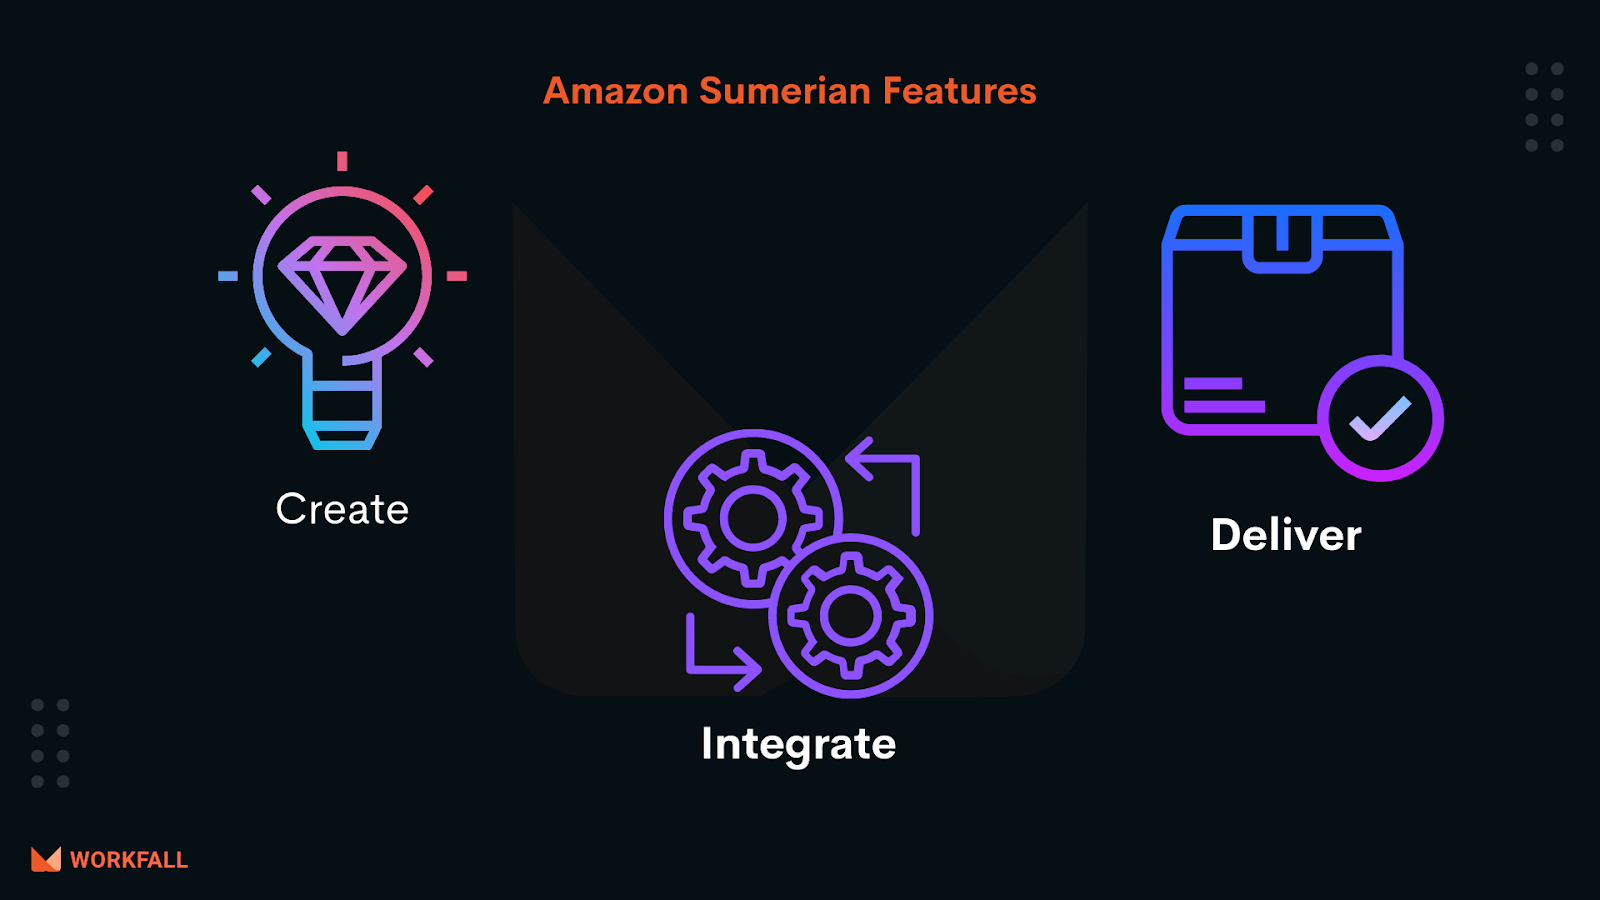 Features of Amazon Sumerian